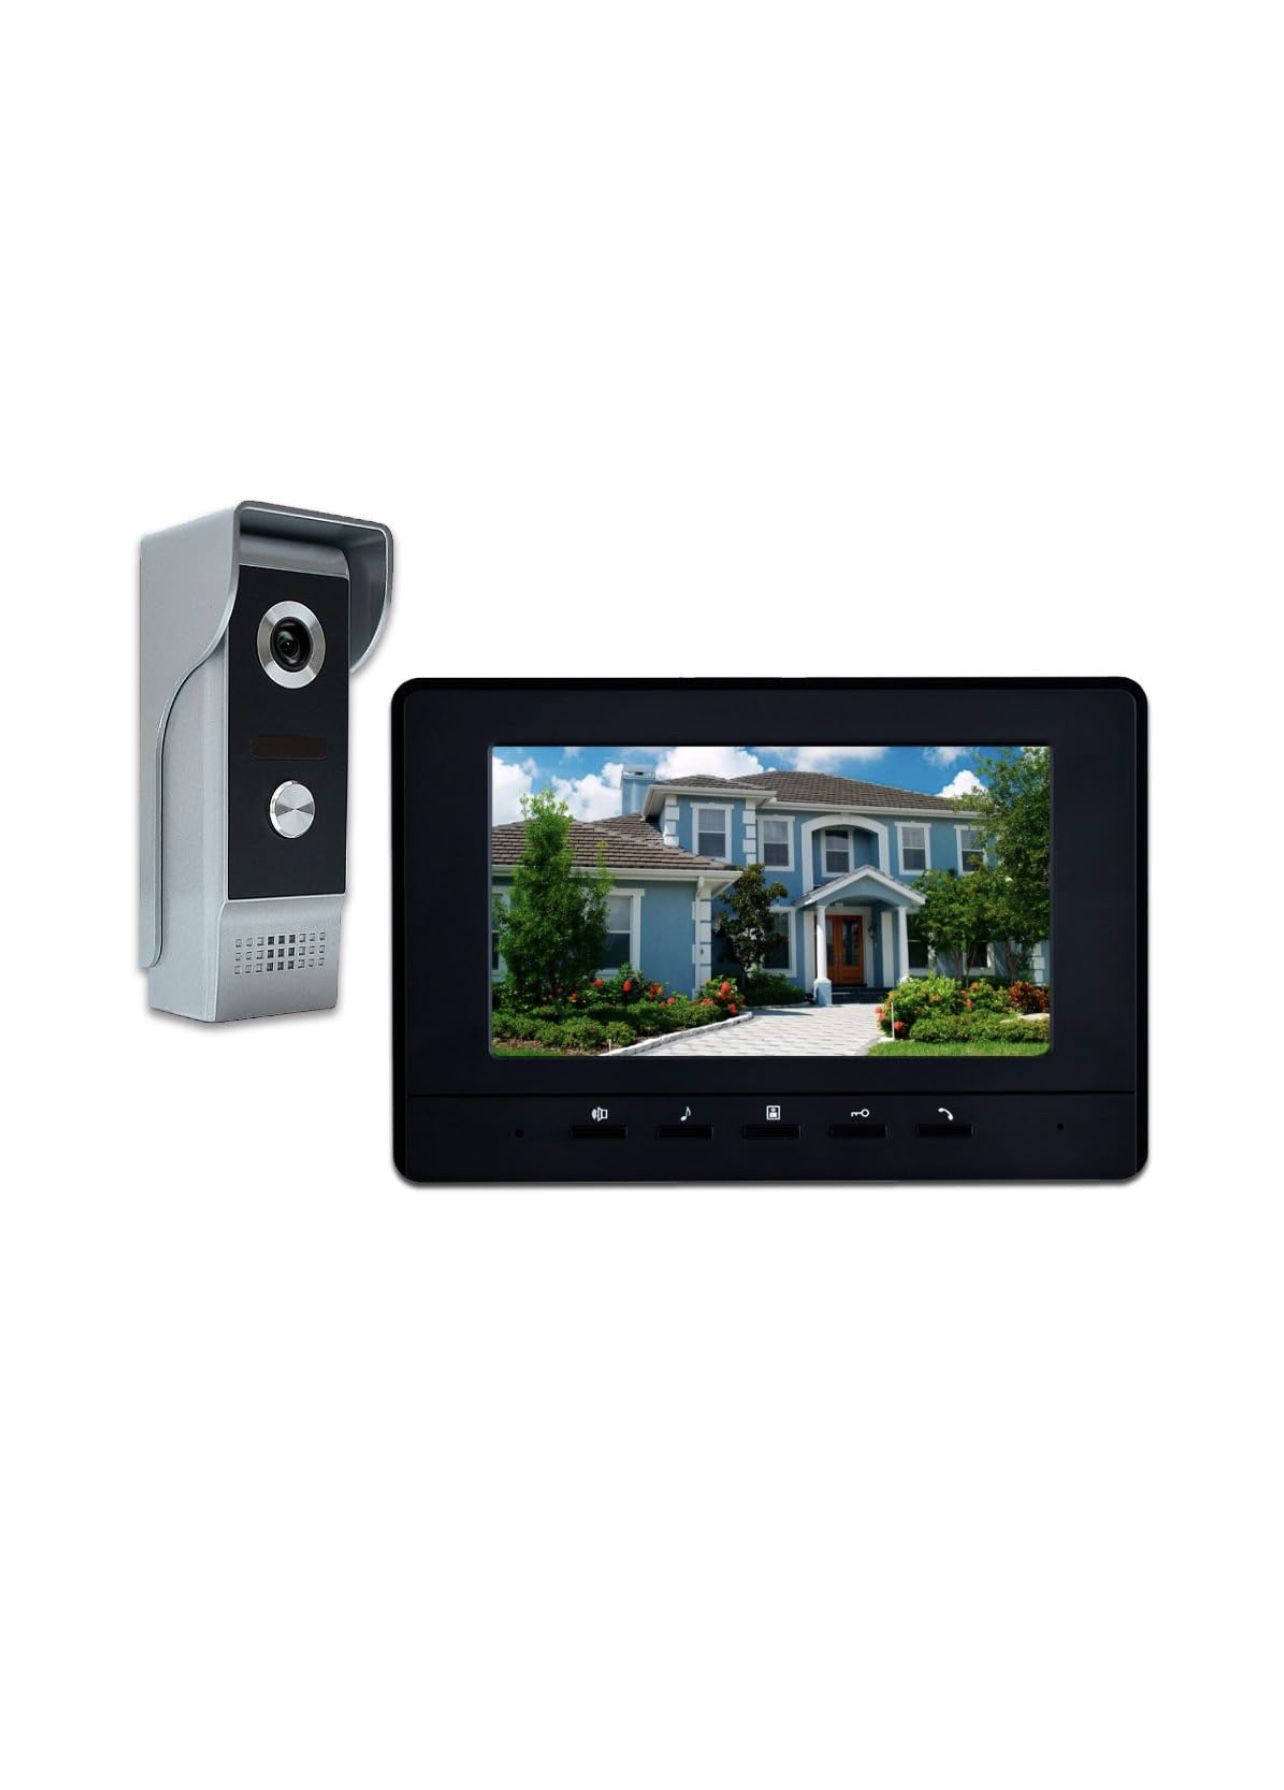 Video Doorbell System (New In Box)